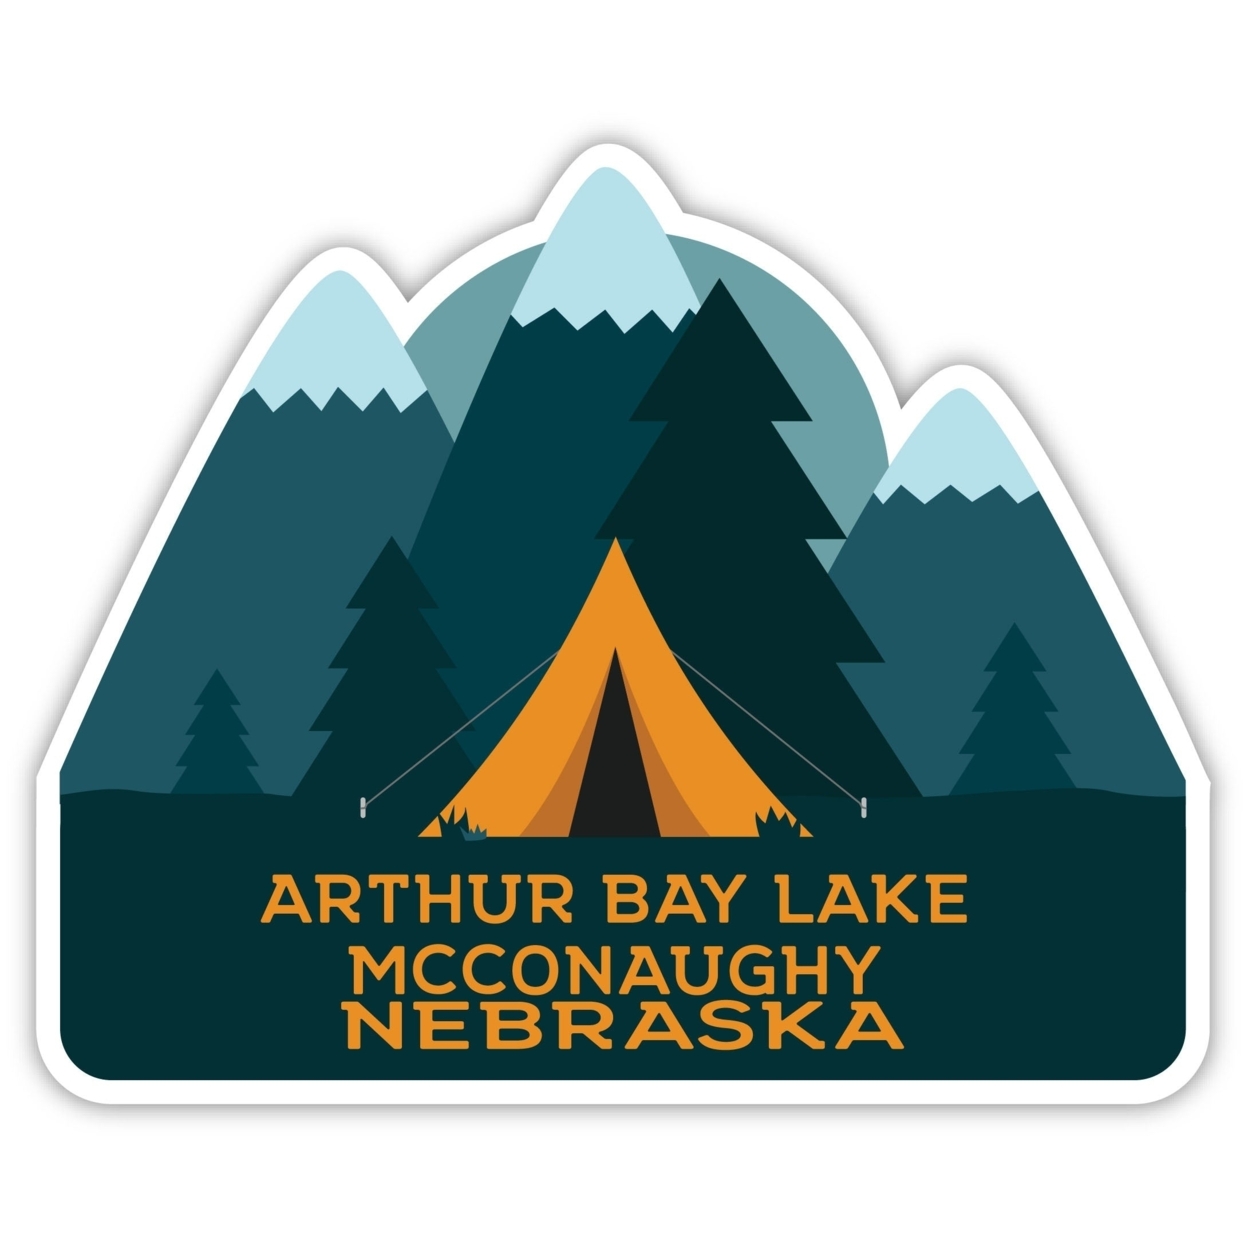 Arthur Bay Lake Mcconaughy Nebraska Souvenir Decorative Stickers (Choose Theme And Size) - Single Unit, 6-Inch, Tent